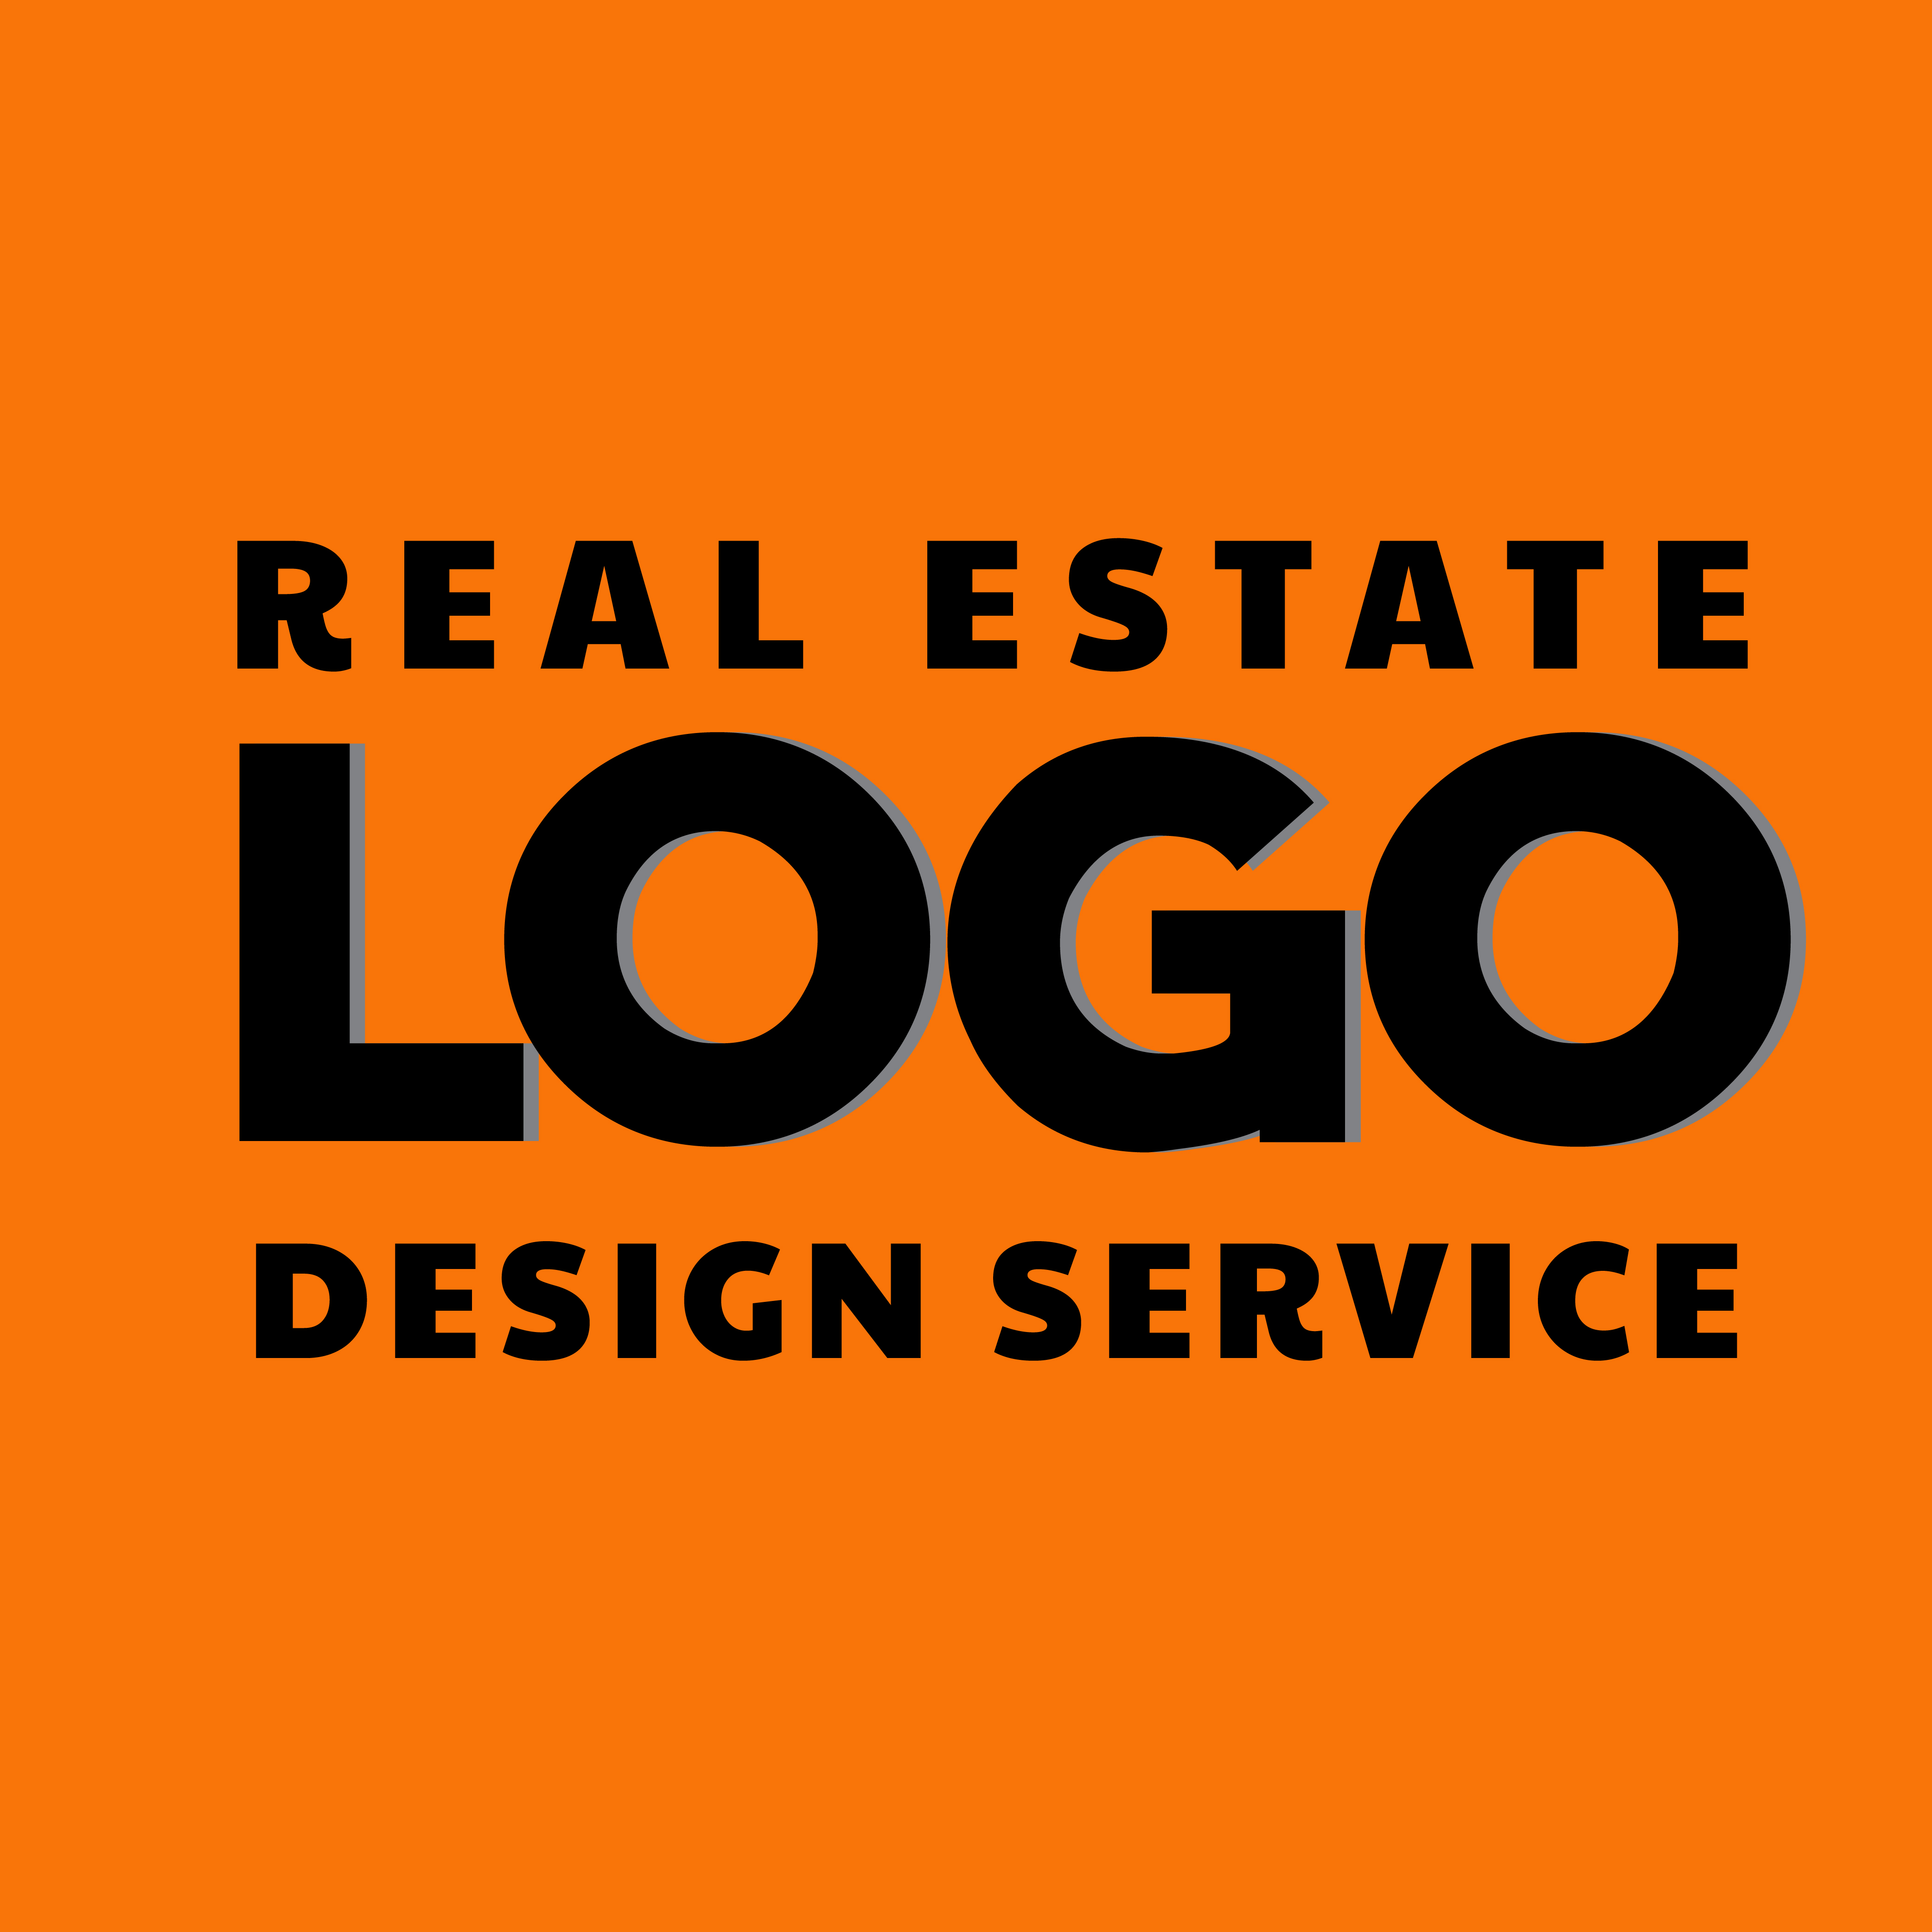 I will create modern real estate property logo